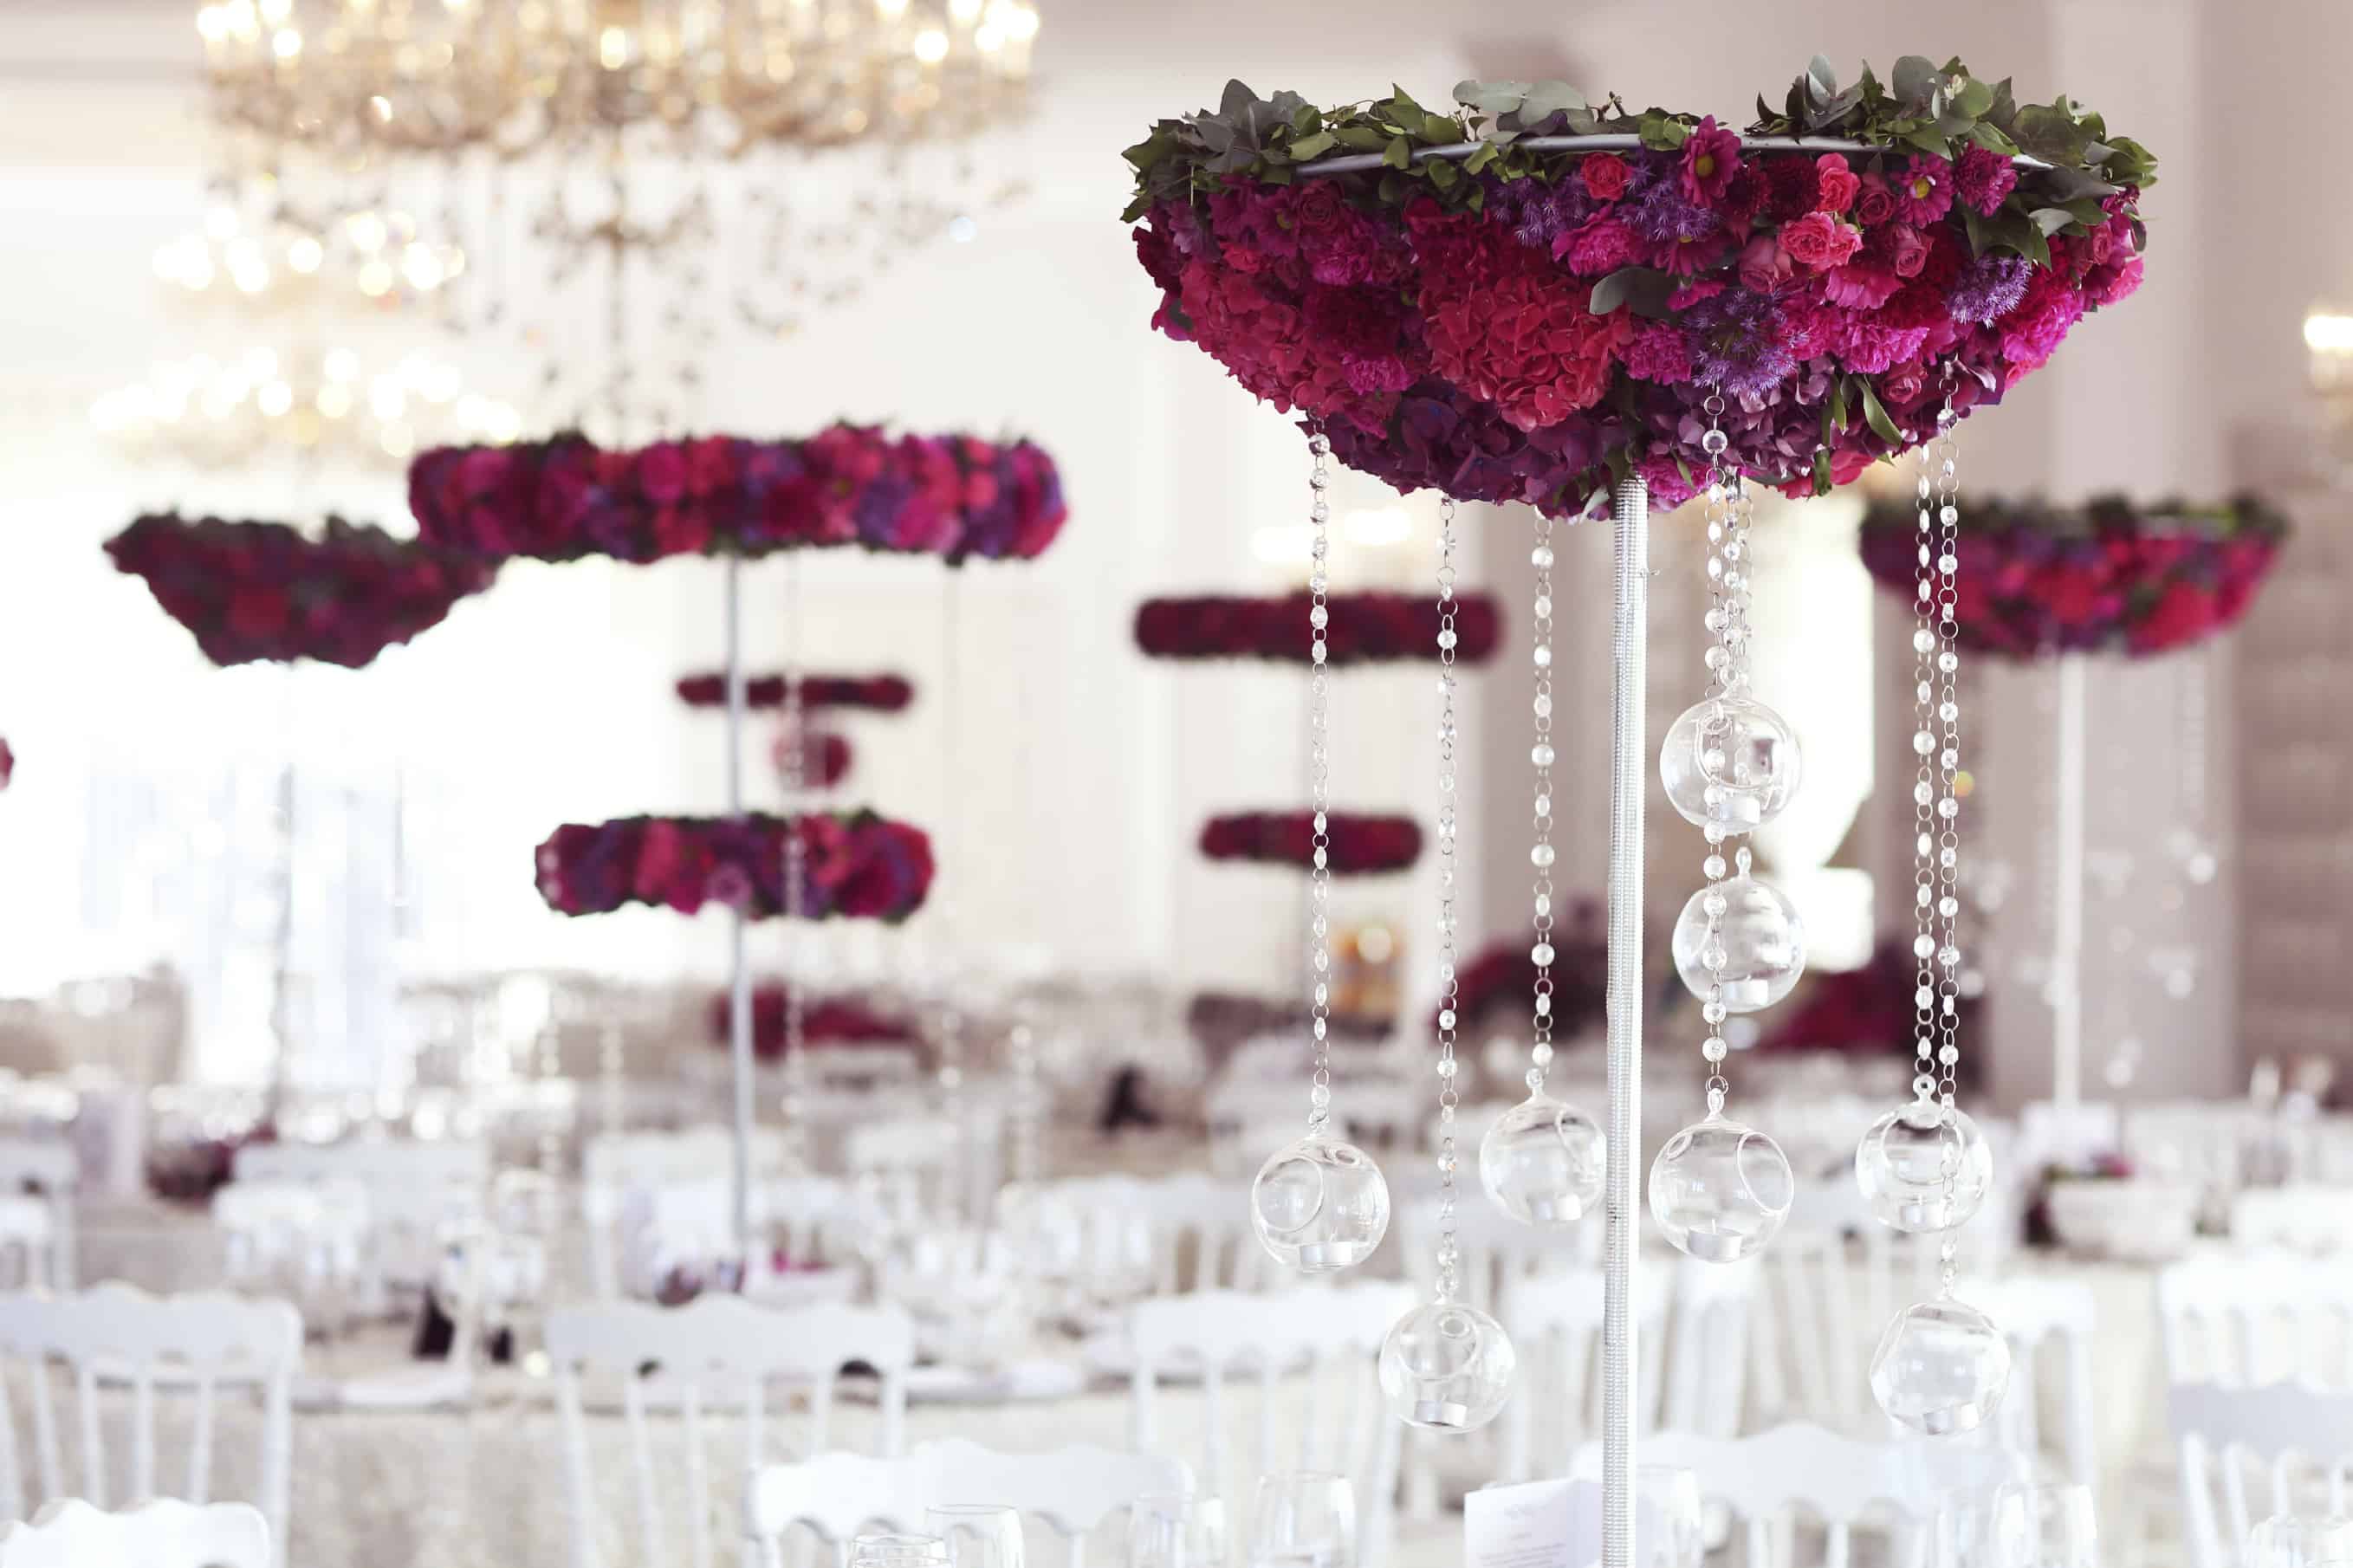 Beautiful flowers on wedding table decoration arrangement